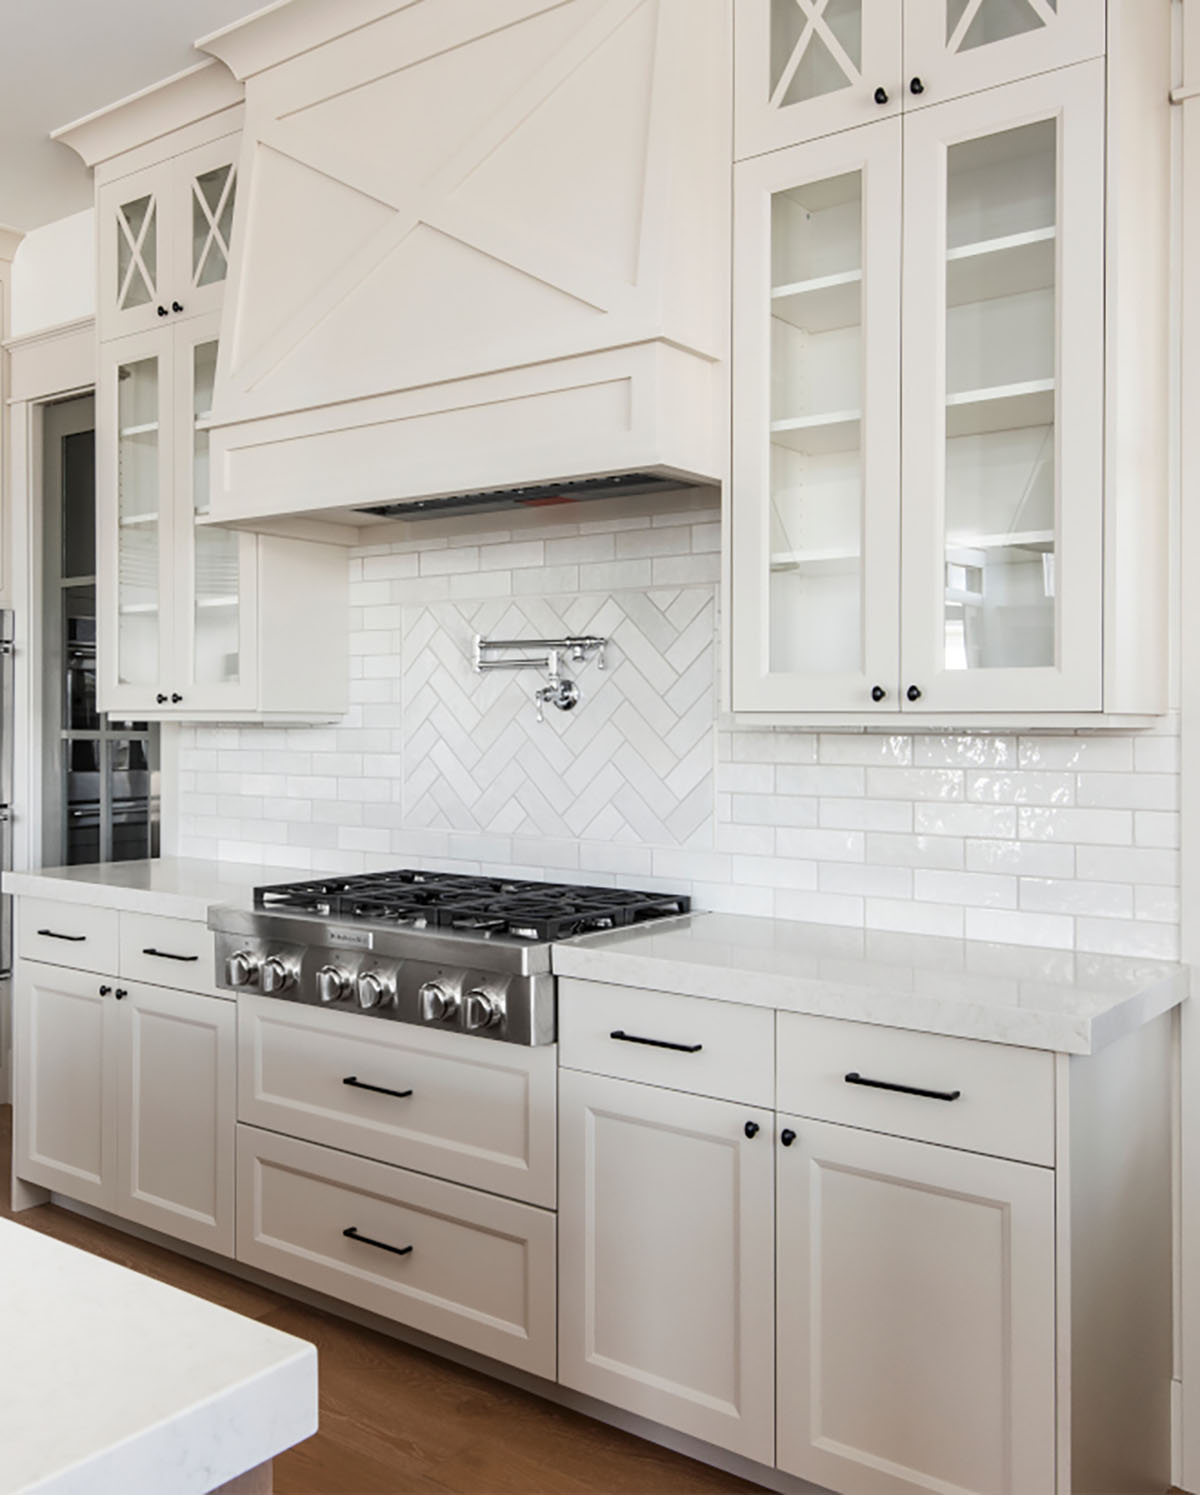 Benjamin Moore Bolboa Mist kitchen cabinets with black hardware, light wood floors, and white backsplash